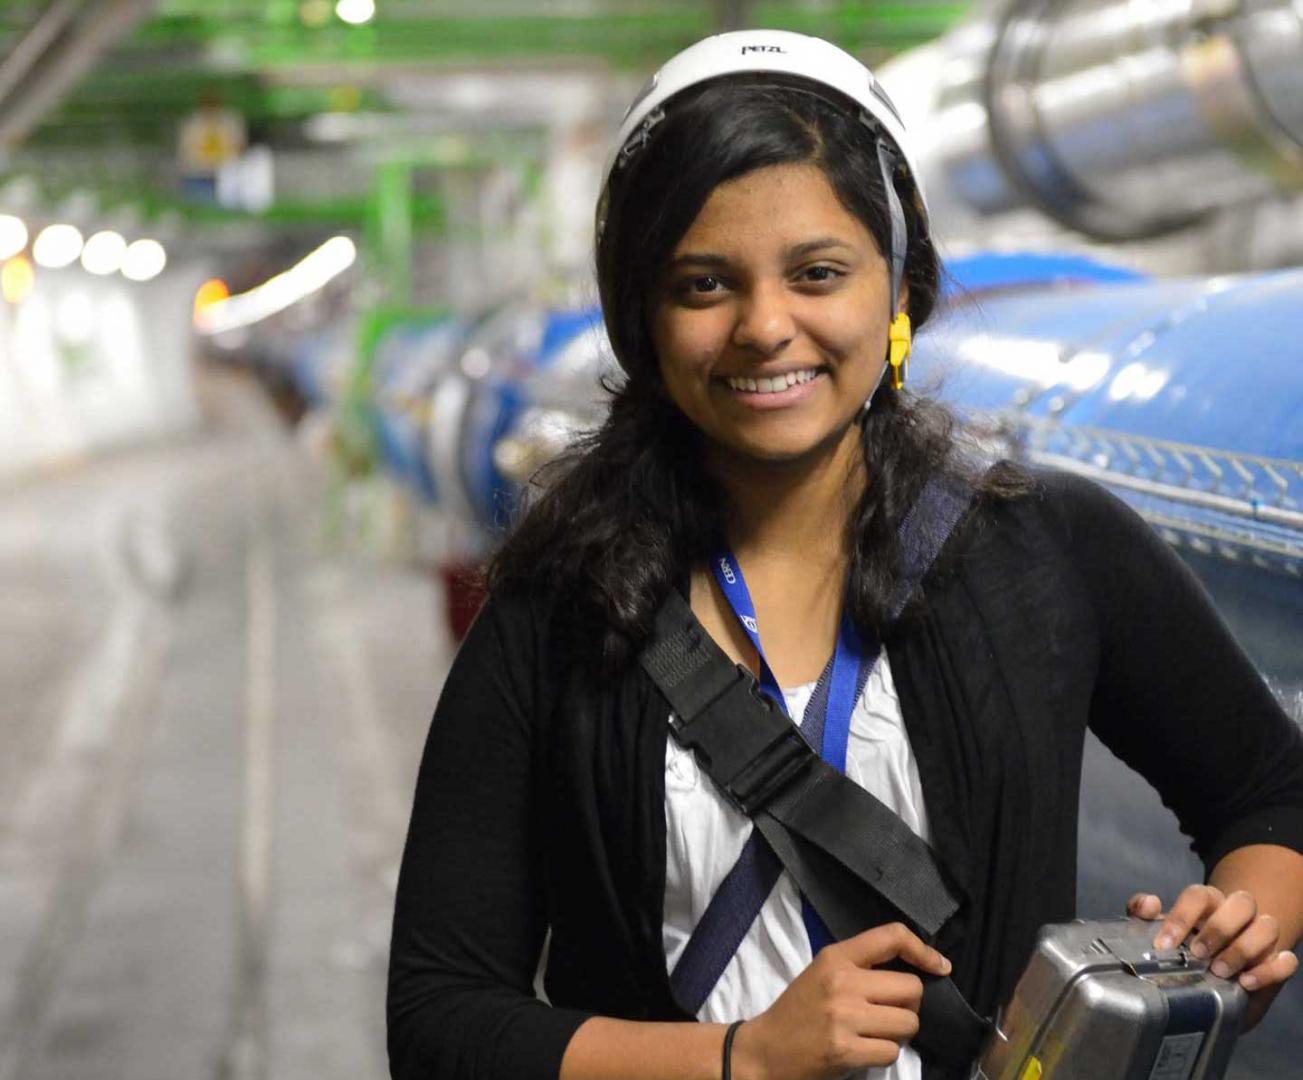 Google Science Fair winner Shree Bose visits CERN